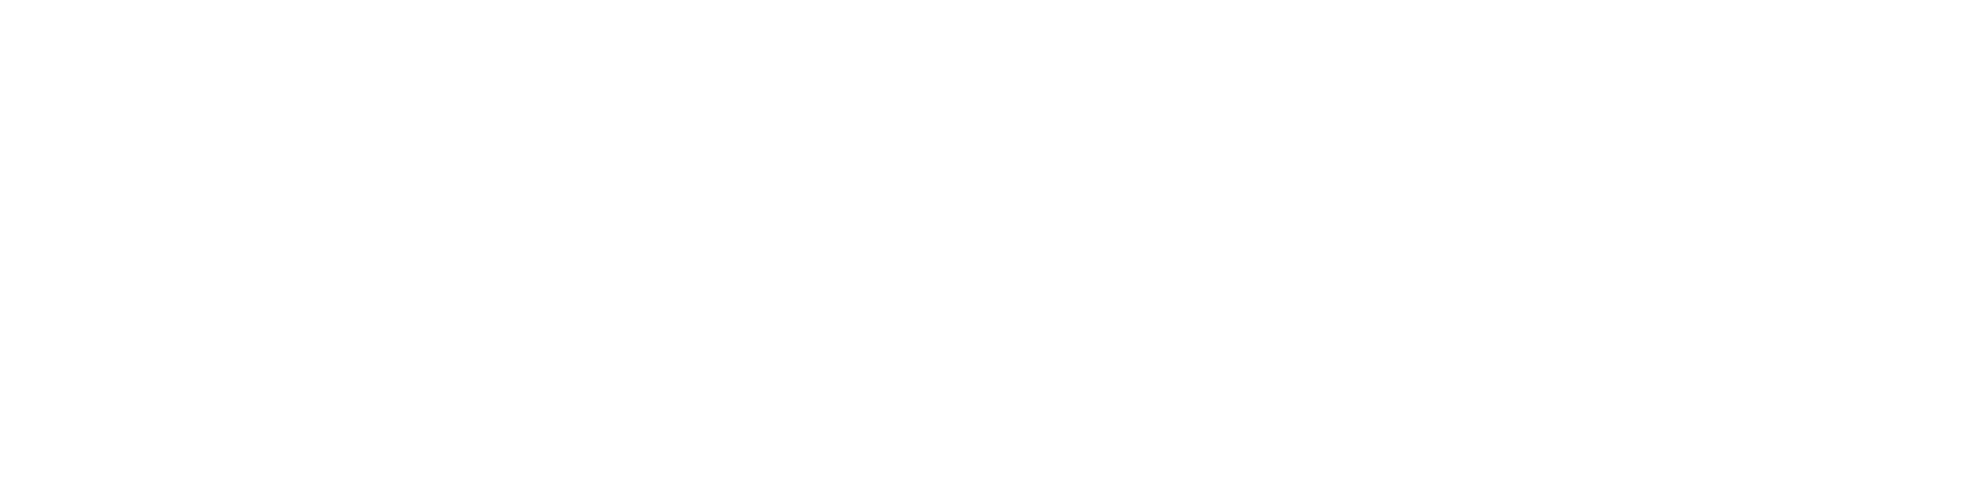 WDFA - Working Dog Federation of Australia